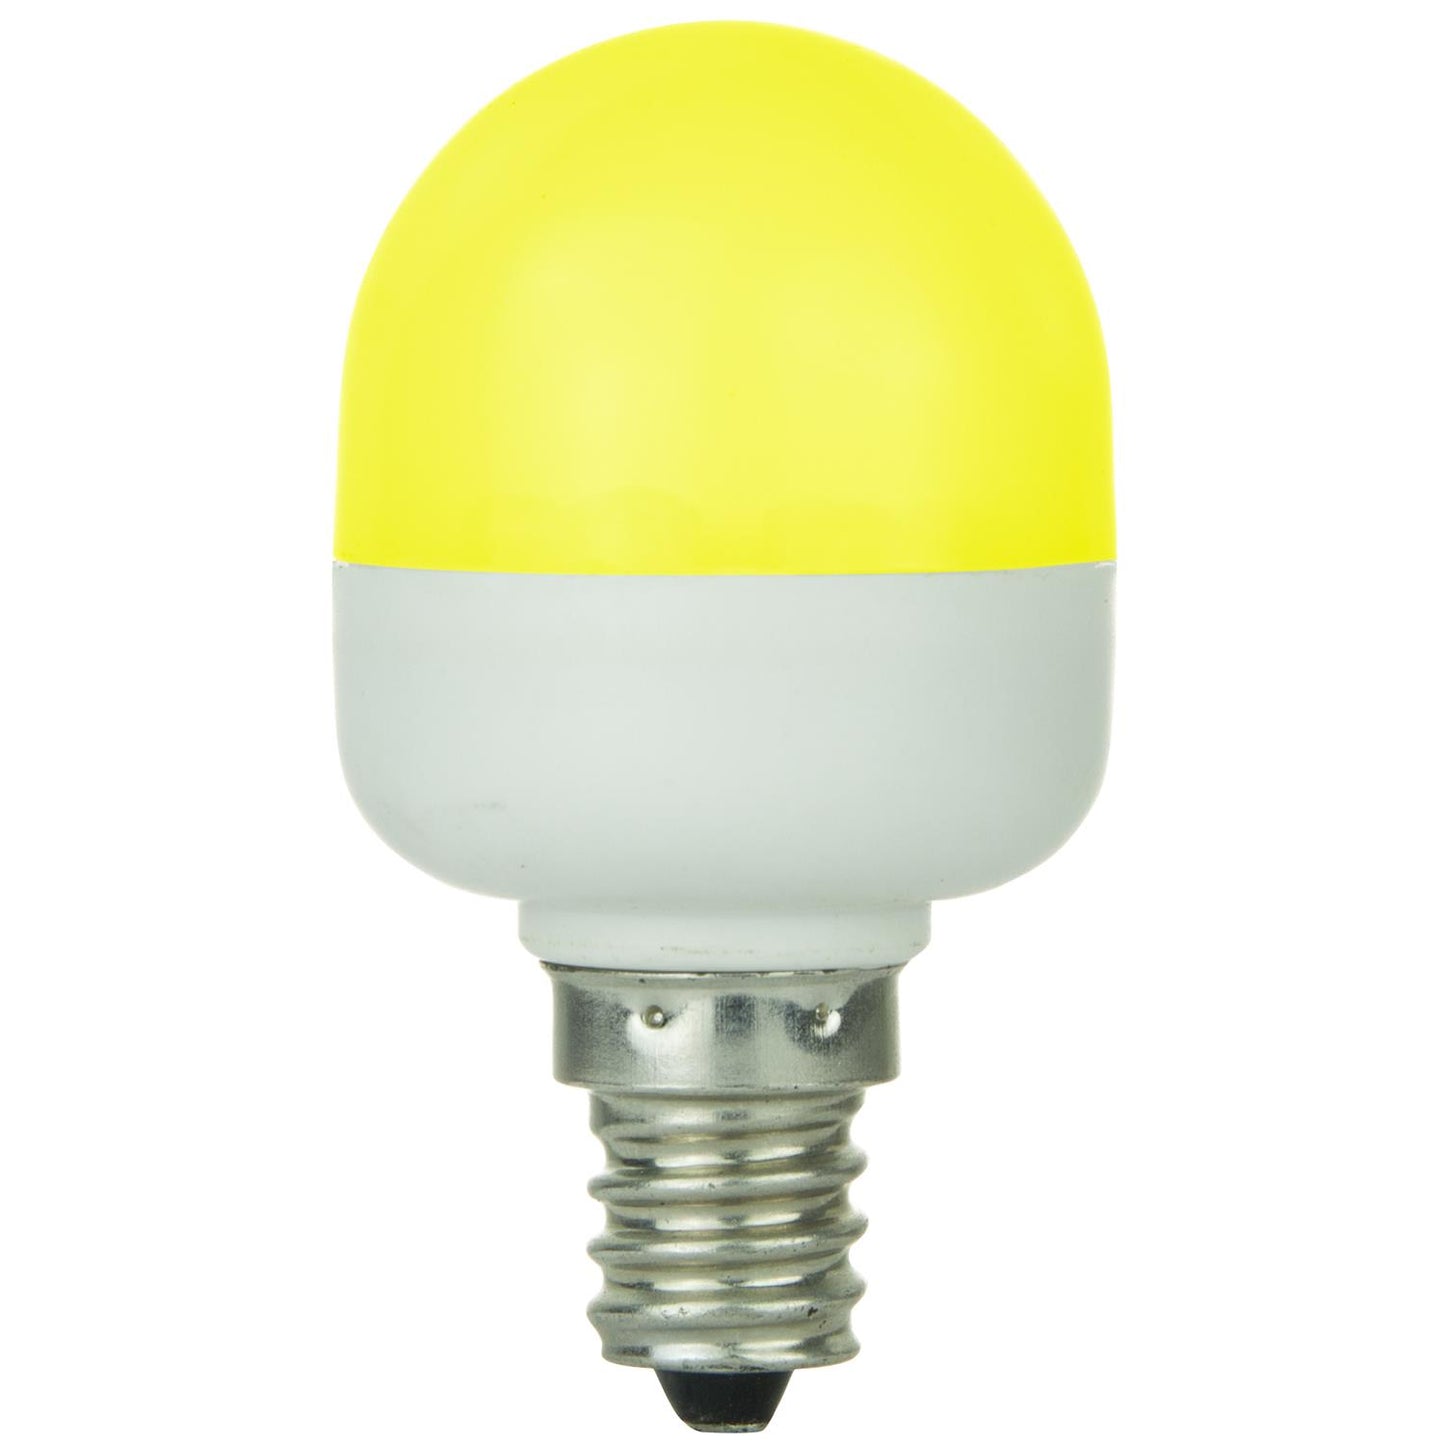 Sunlite T10 Tubular Indicator, Candelabra Base Light Bulb, Yellow